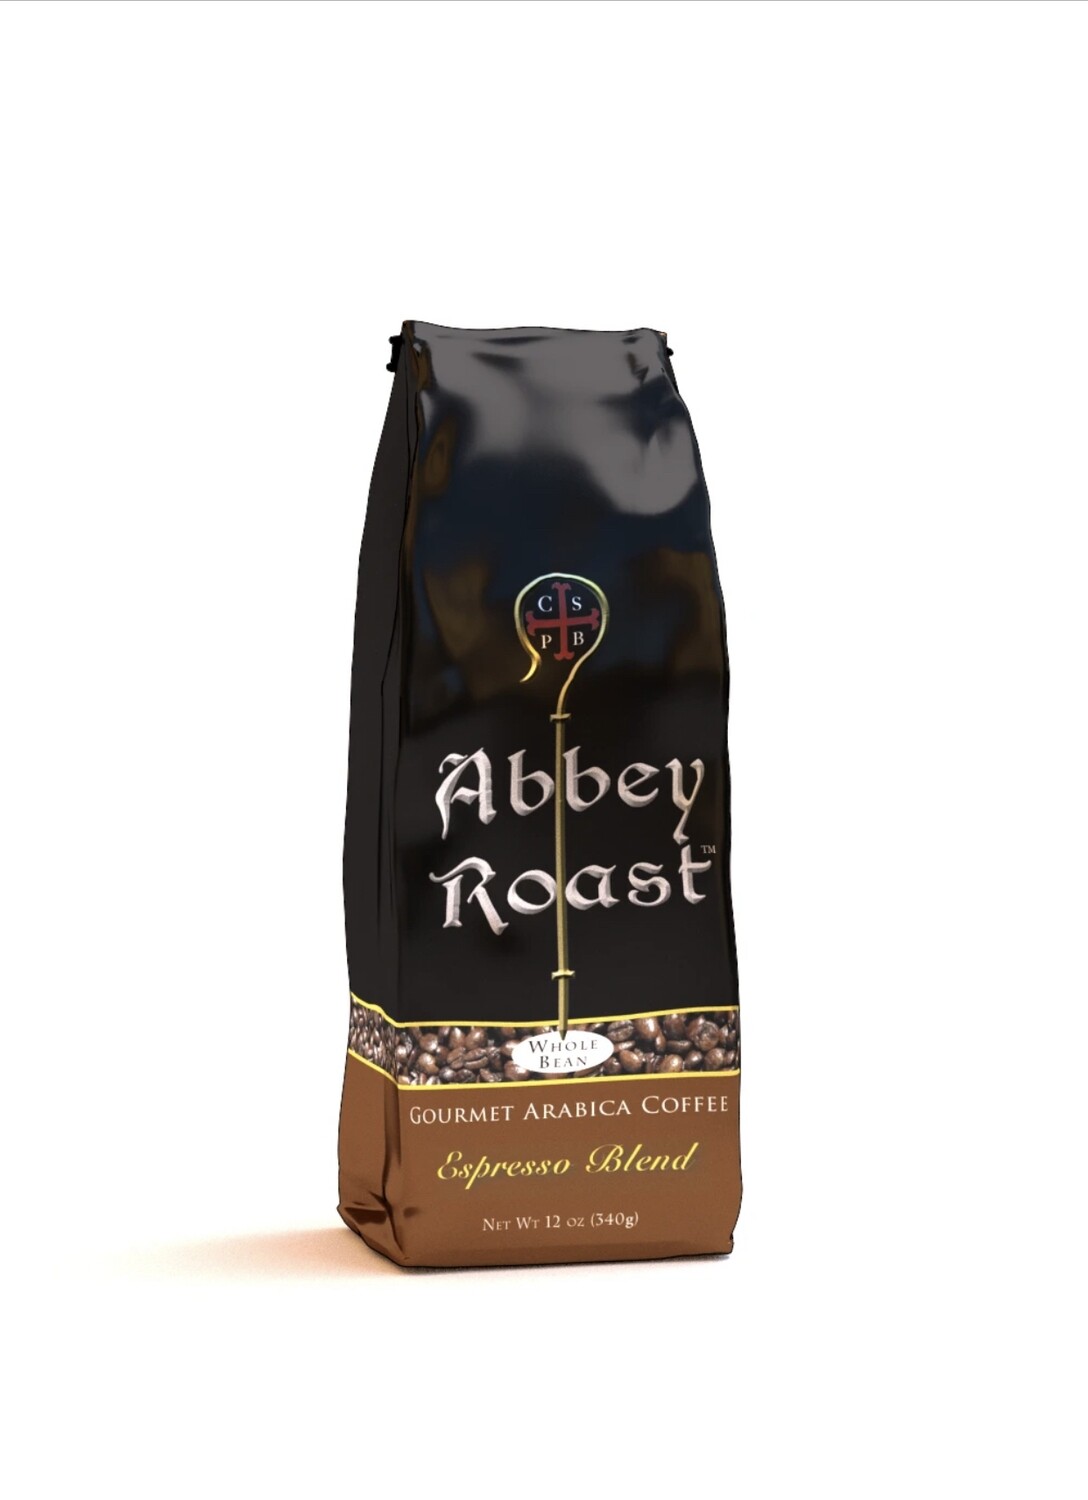 Abbey Roast Espresso blend